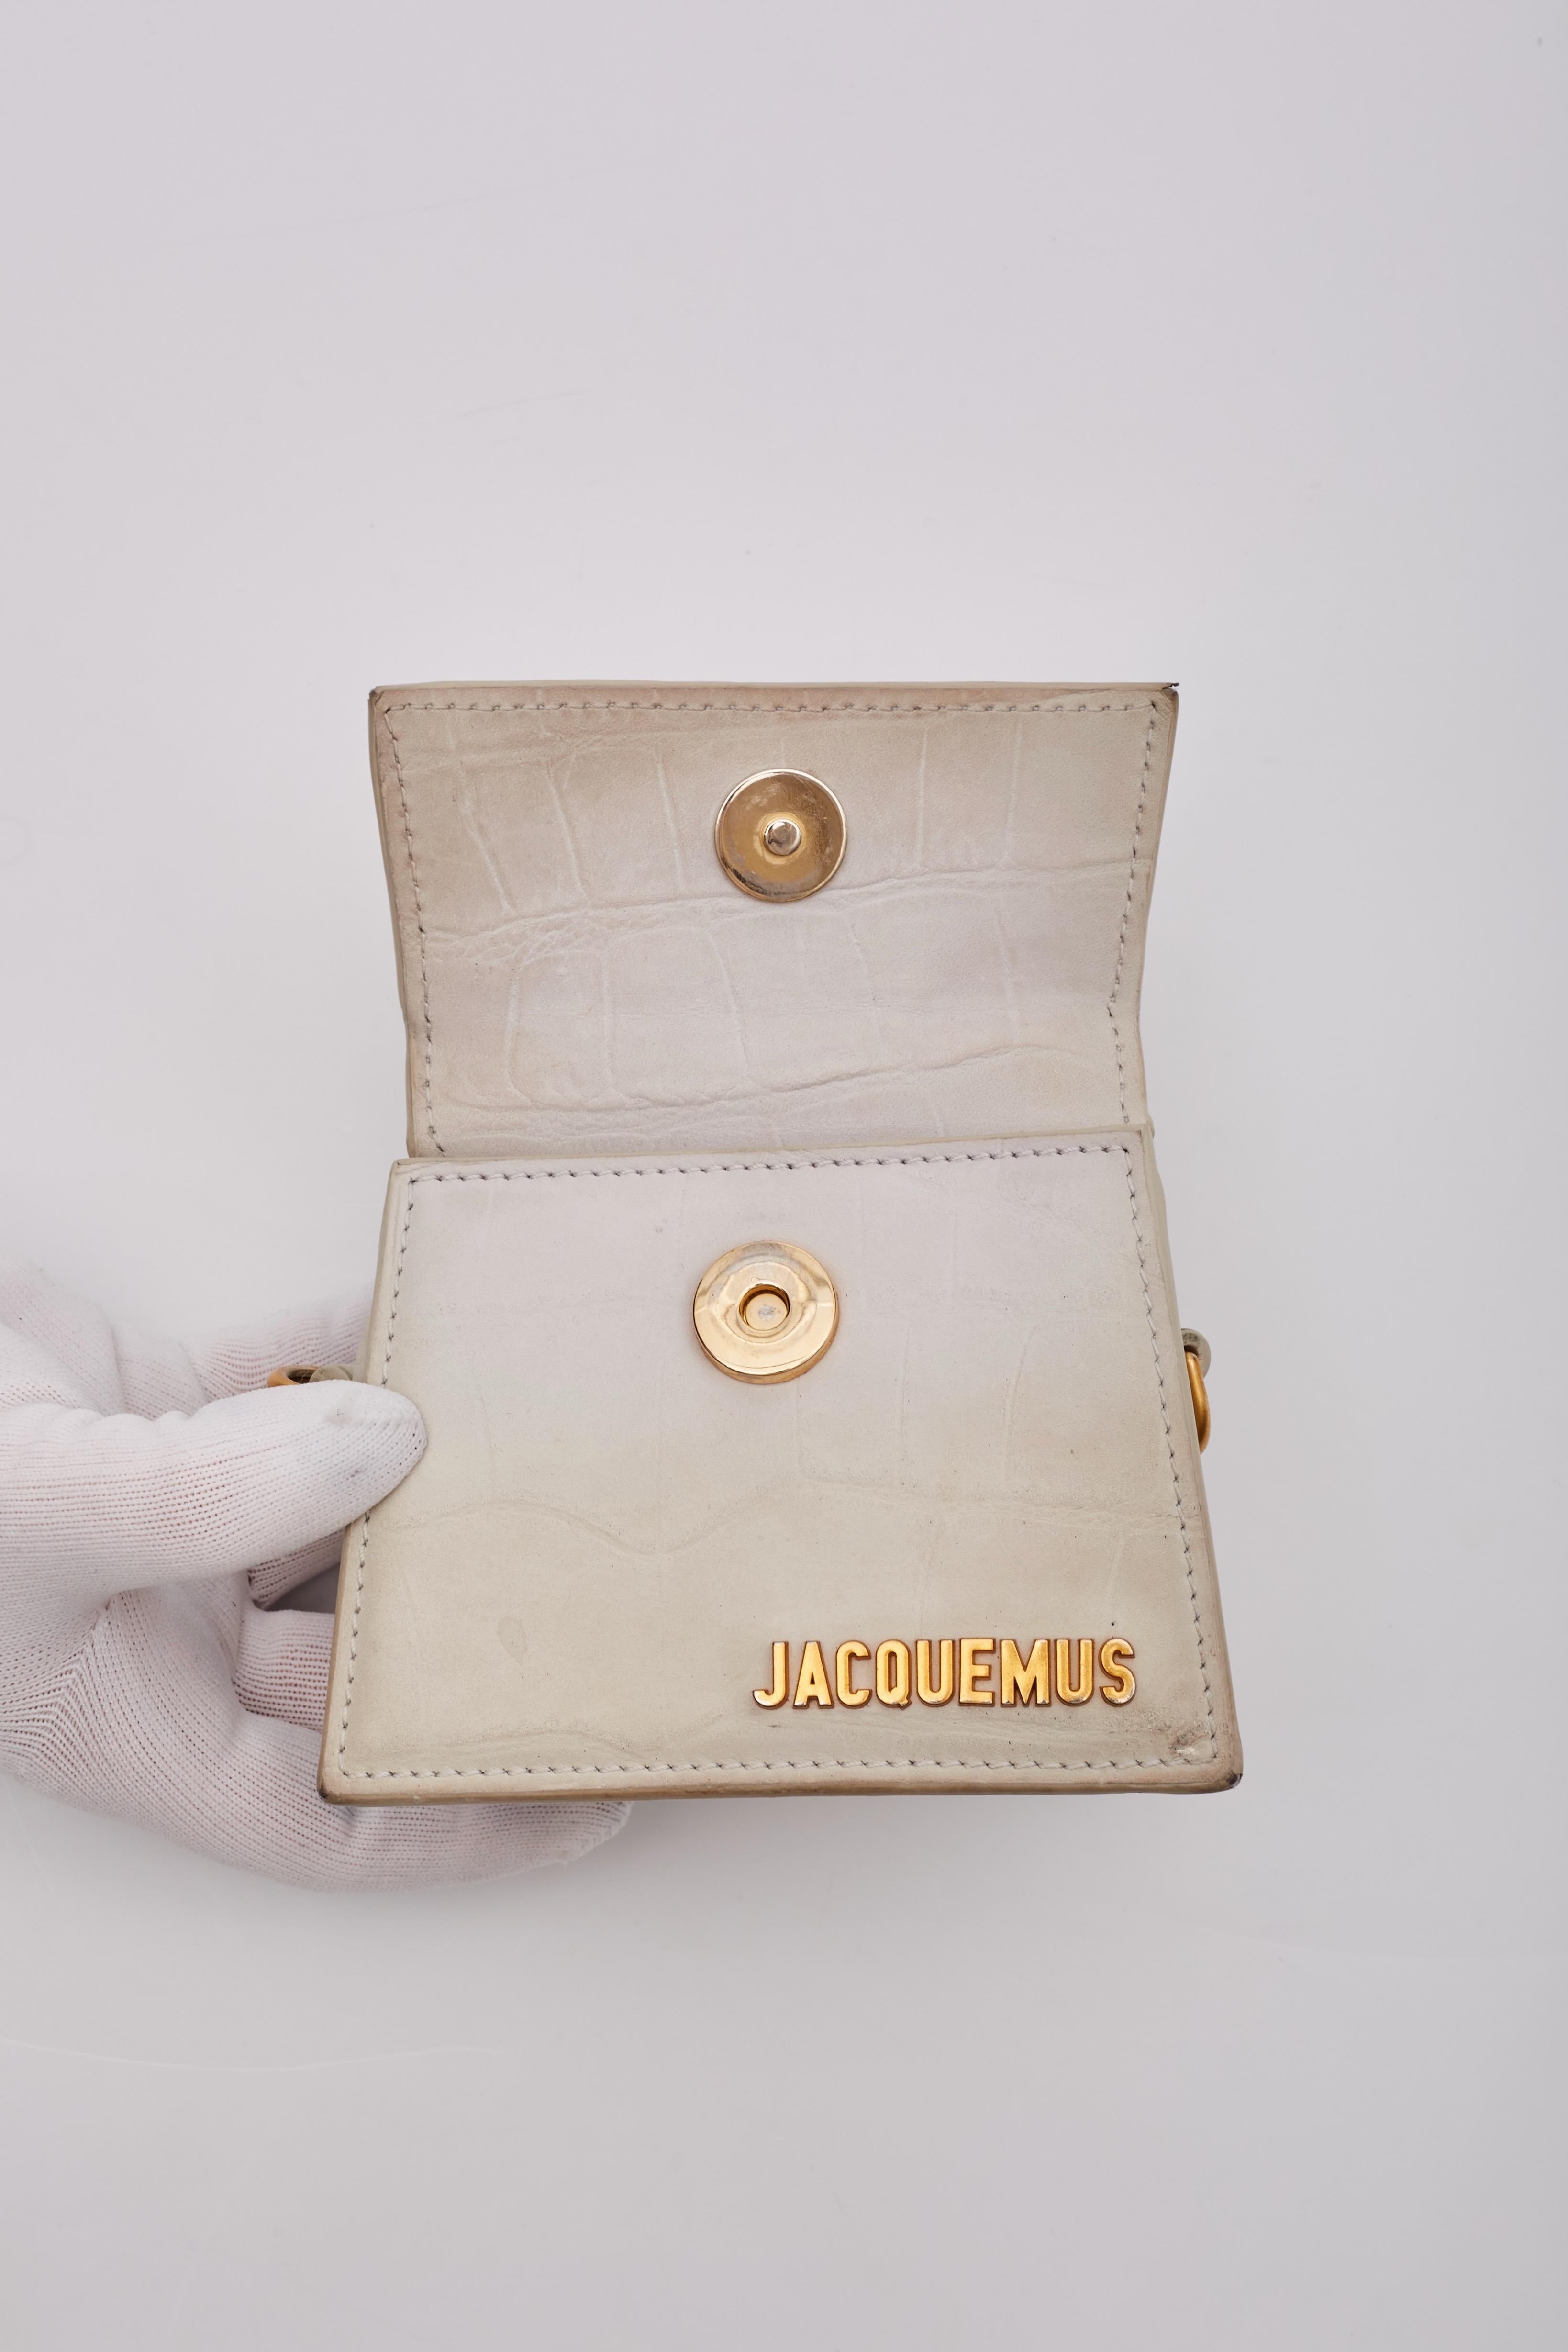 Jacquemus Off White Croc Mini Le Chiquito Clutch Bag For Sale 4